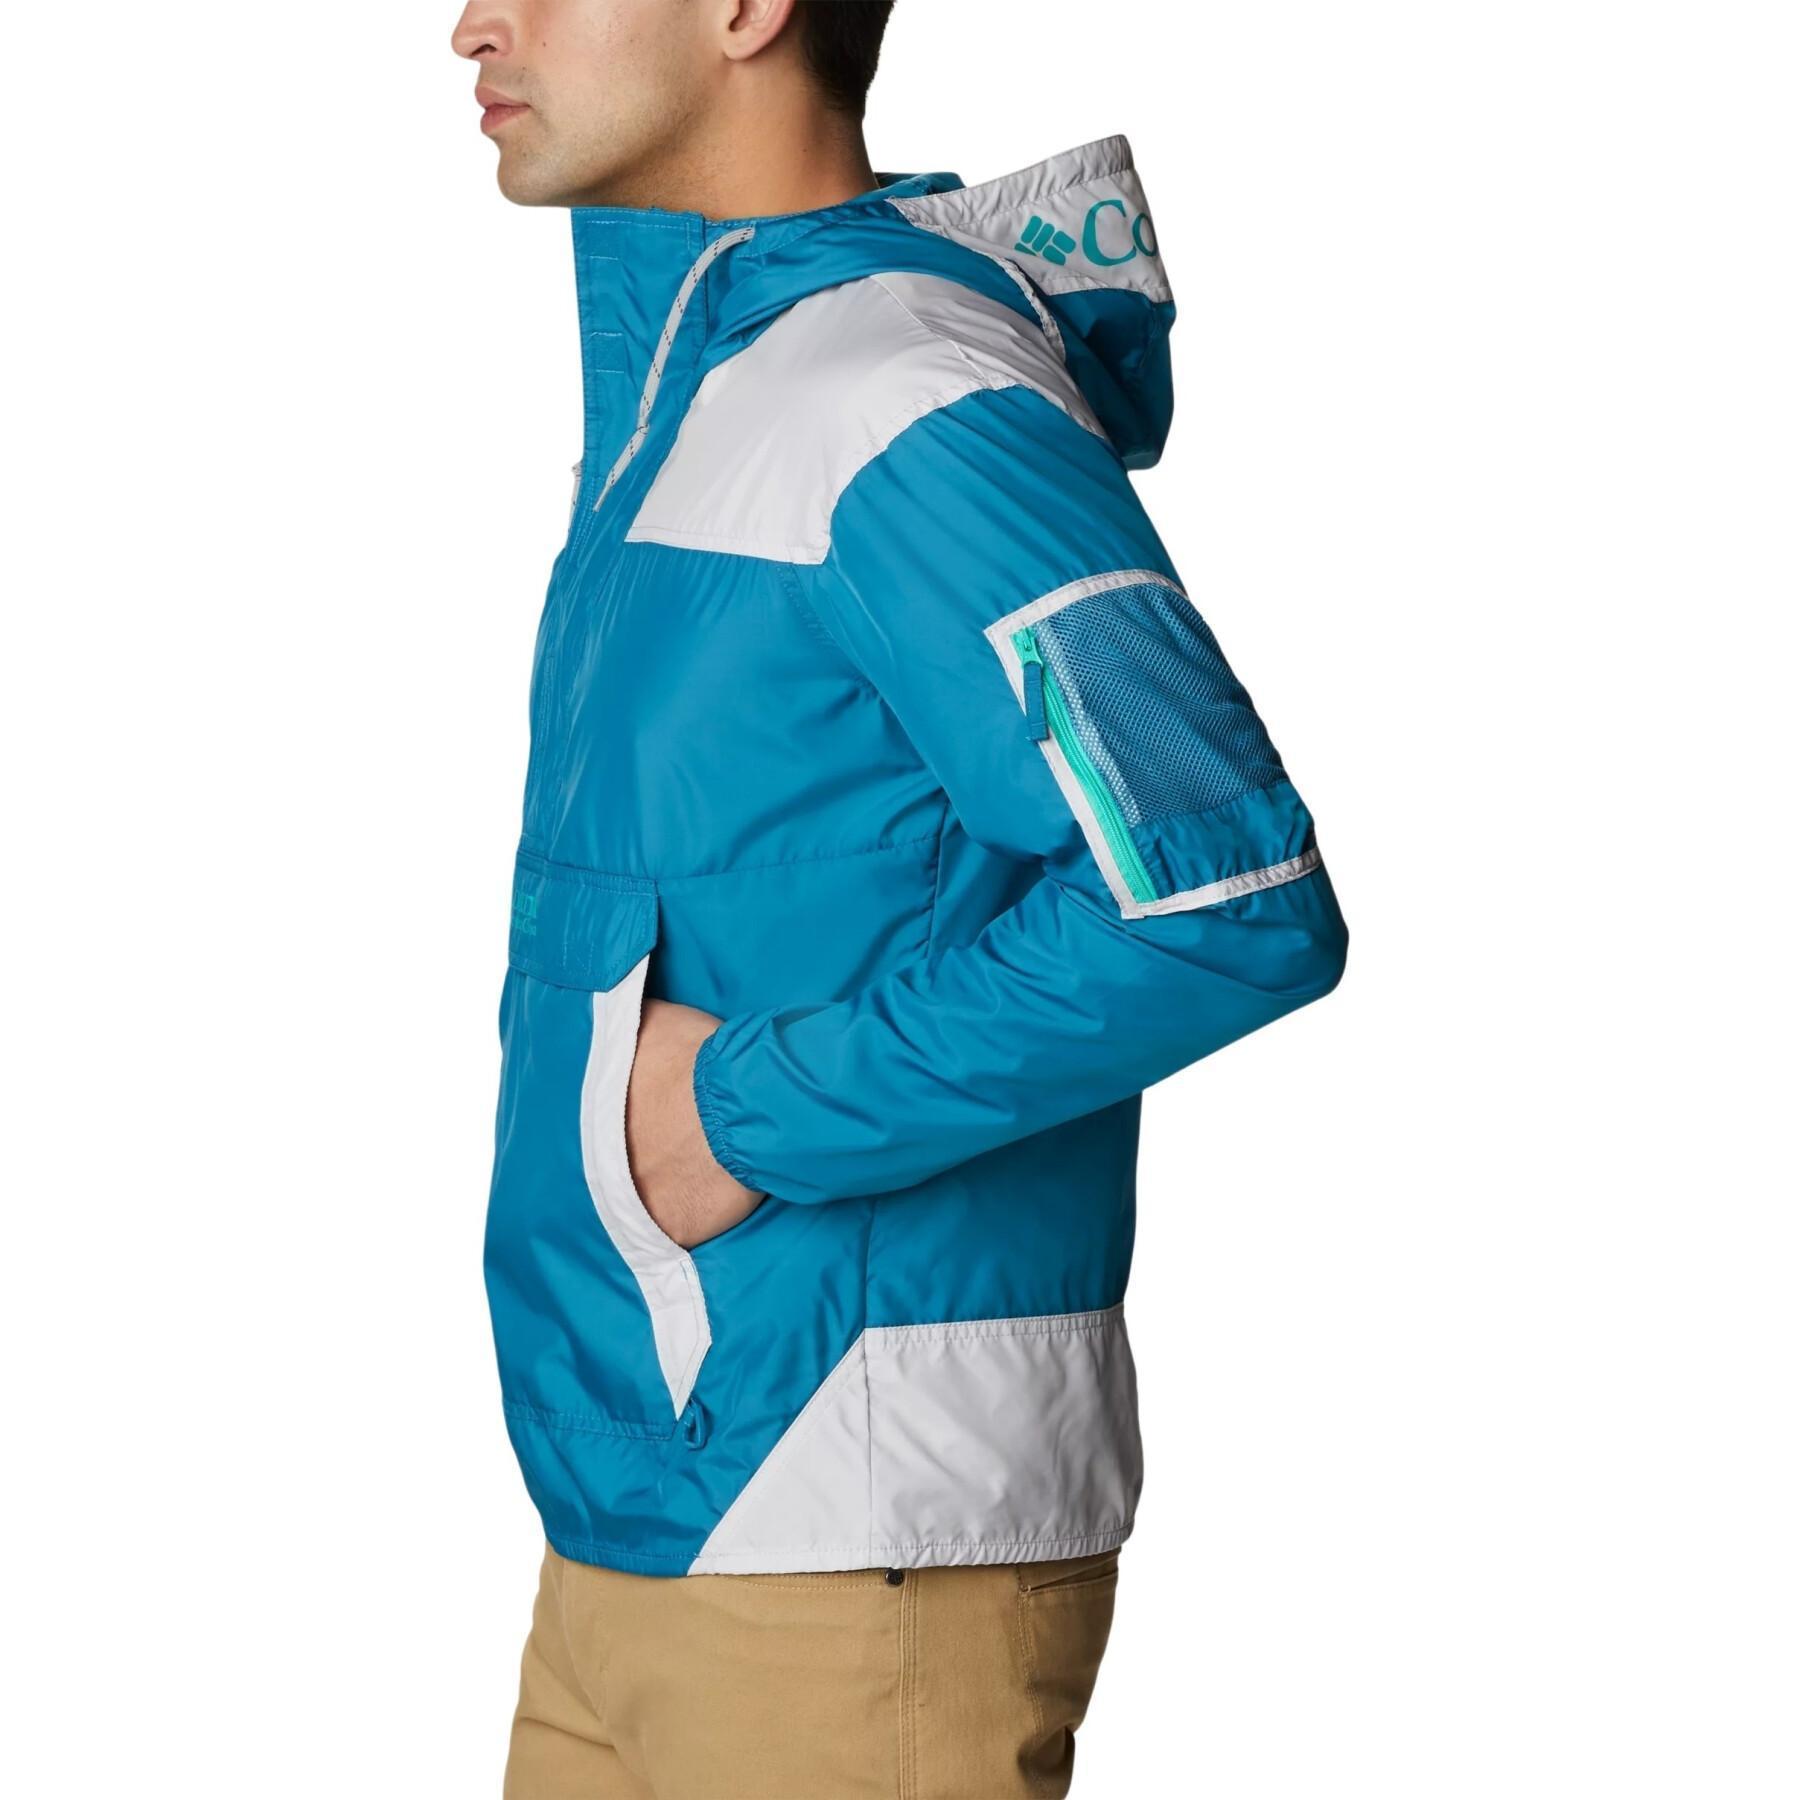 Windproof jacket Columbia Challenger